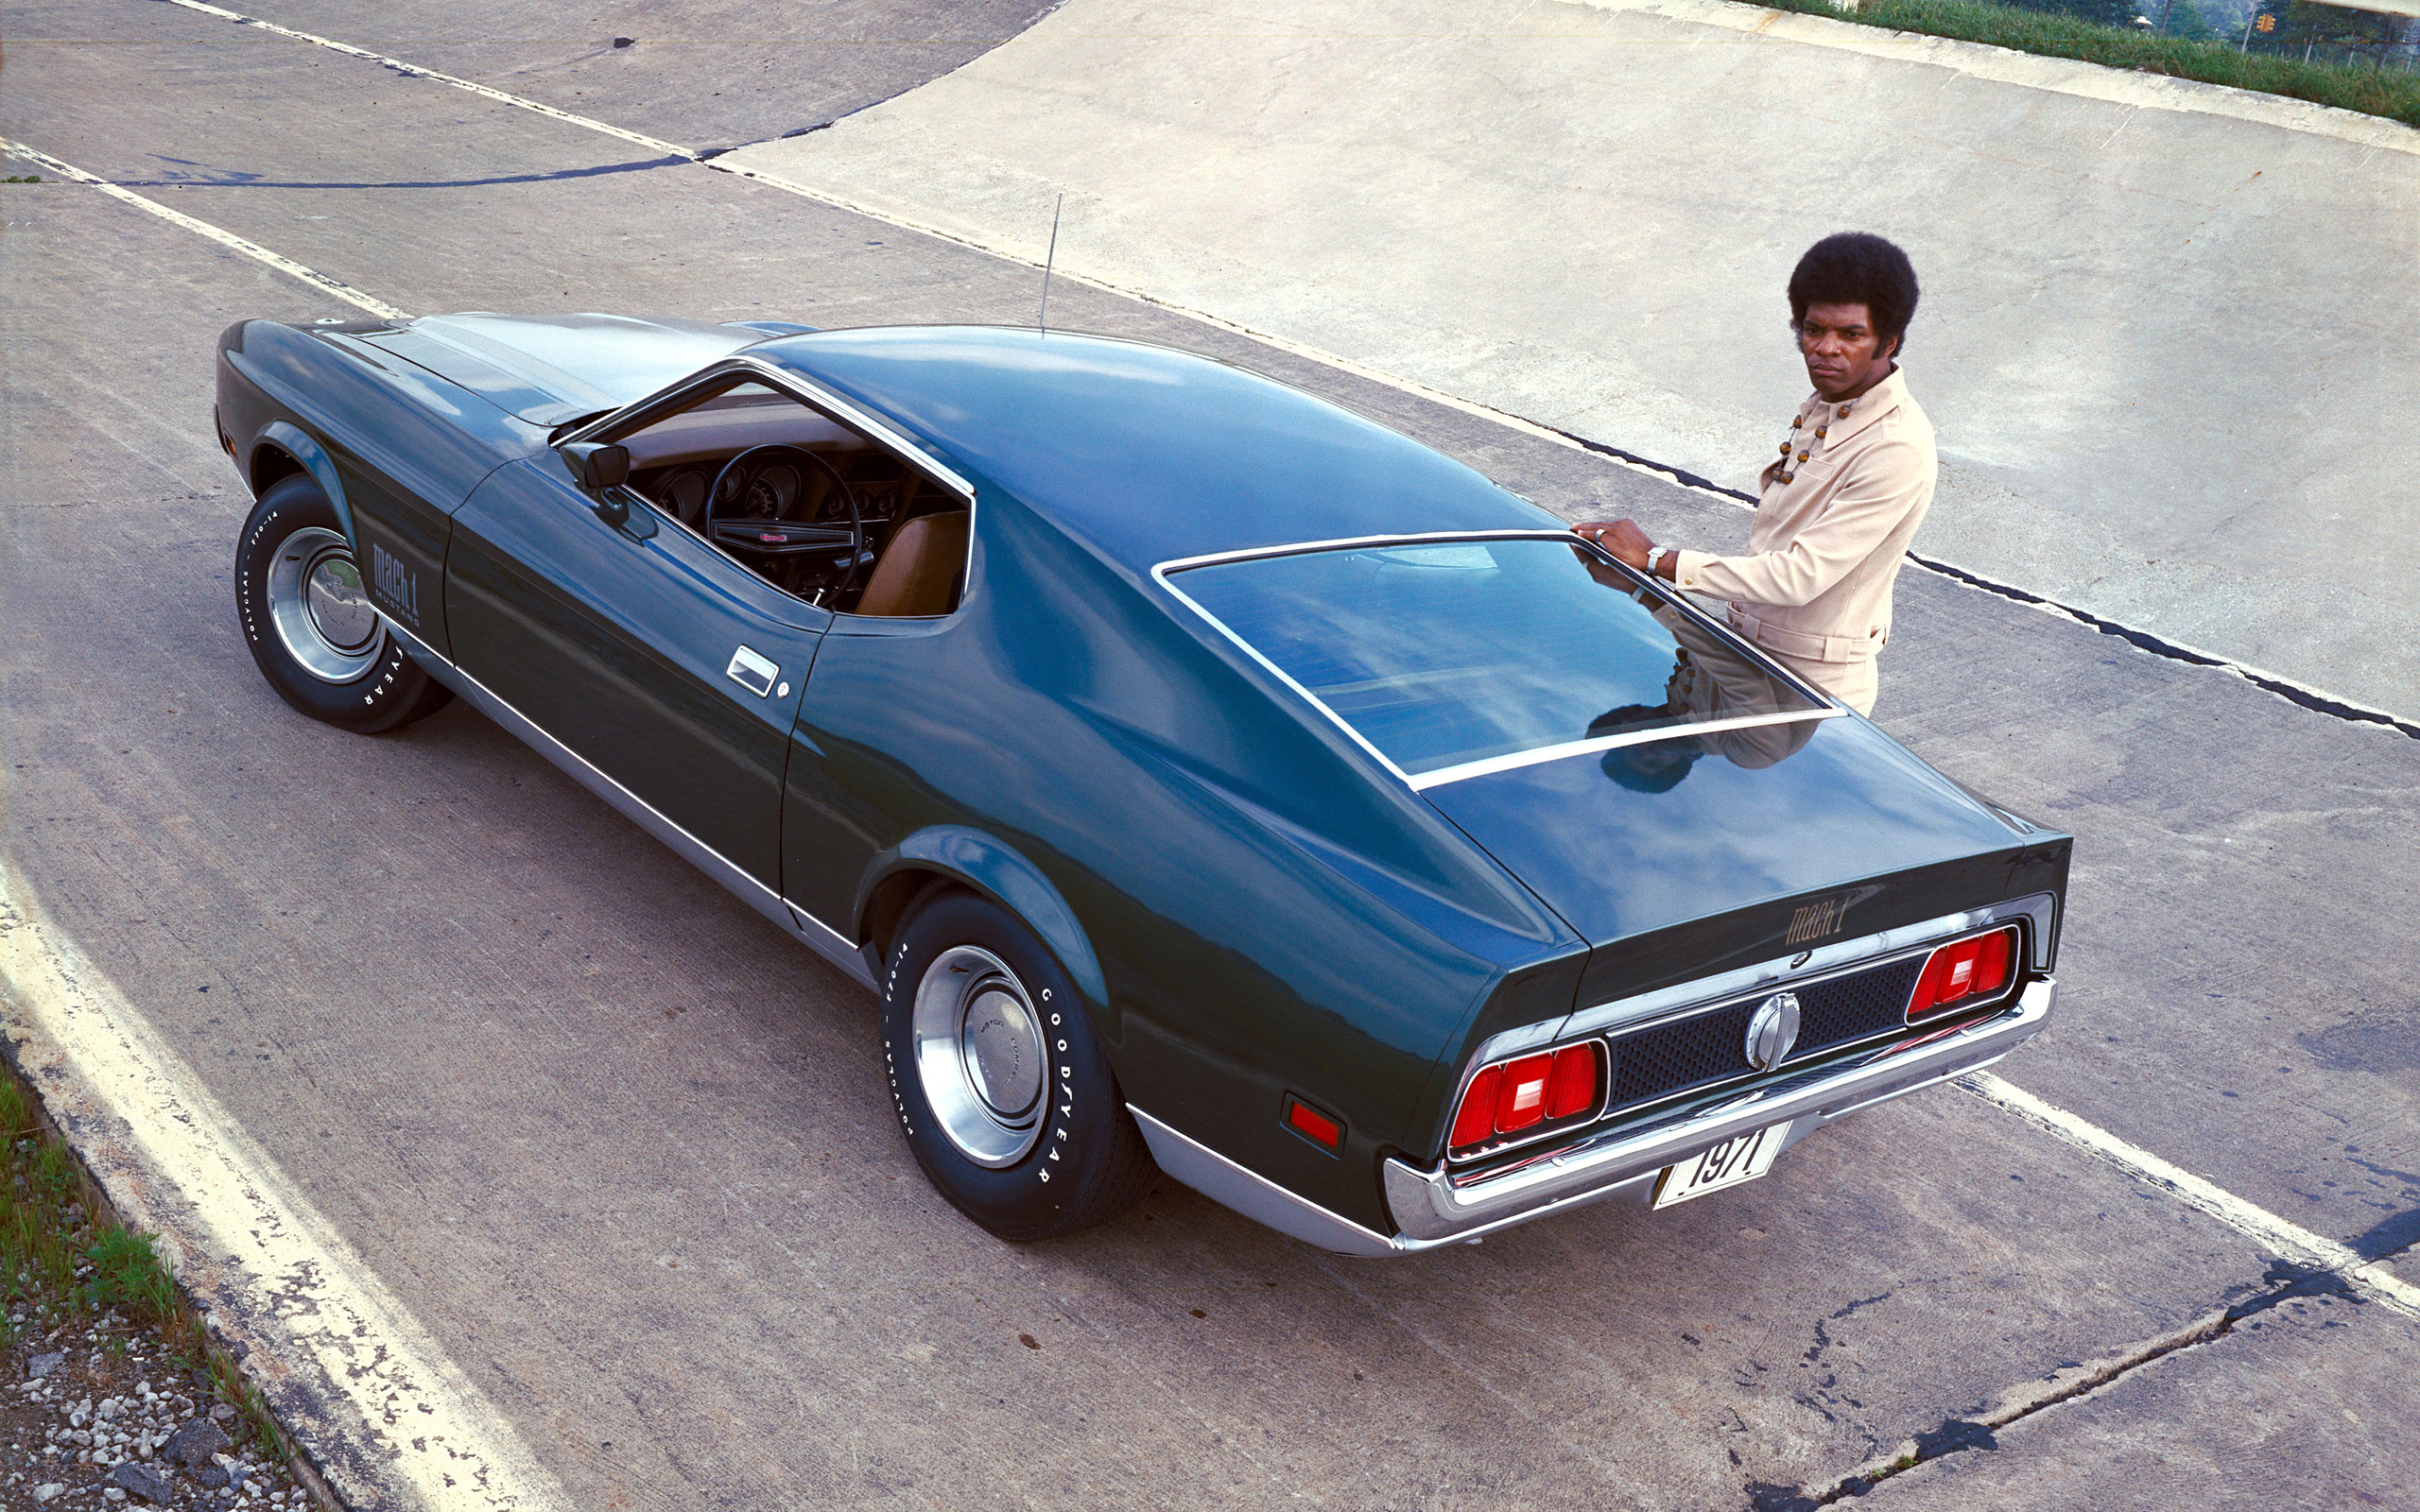  1971 Ford Mustang Mach 1 Wallpaper.